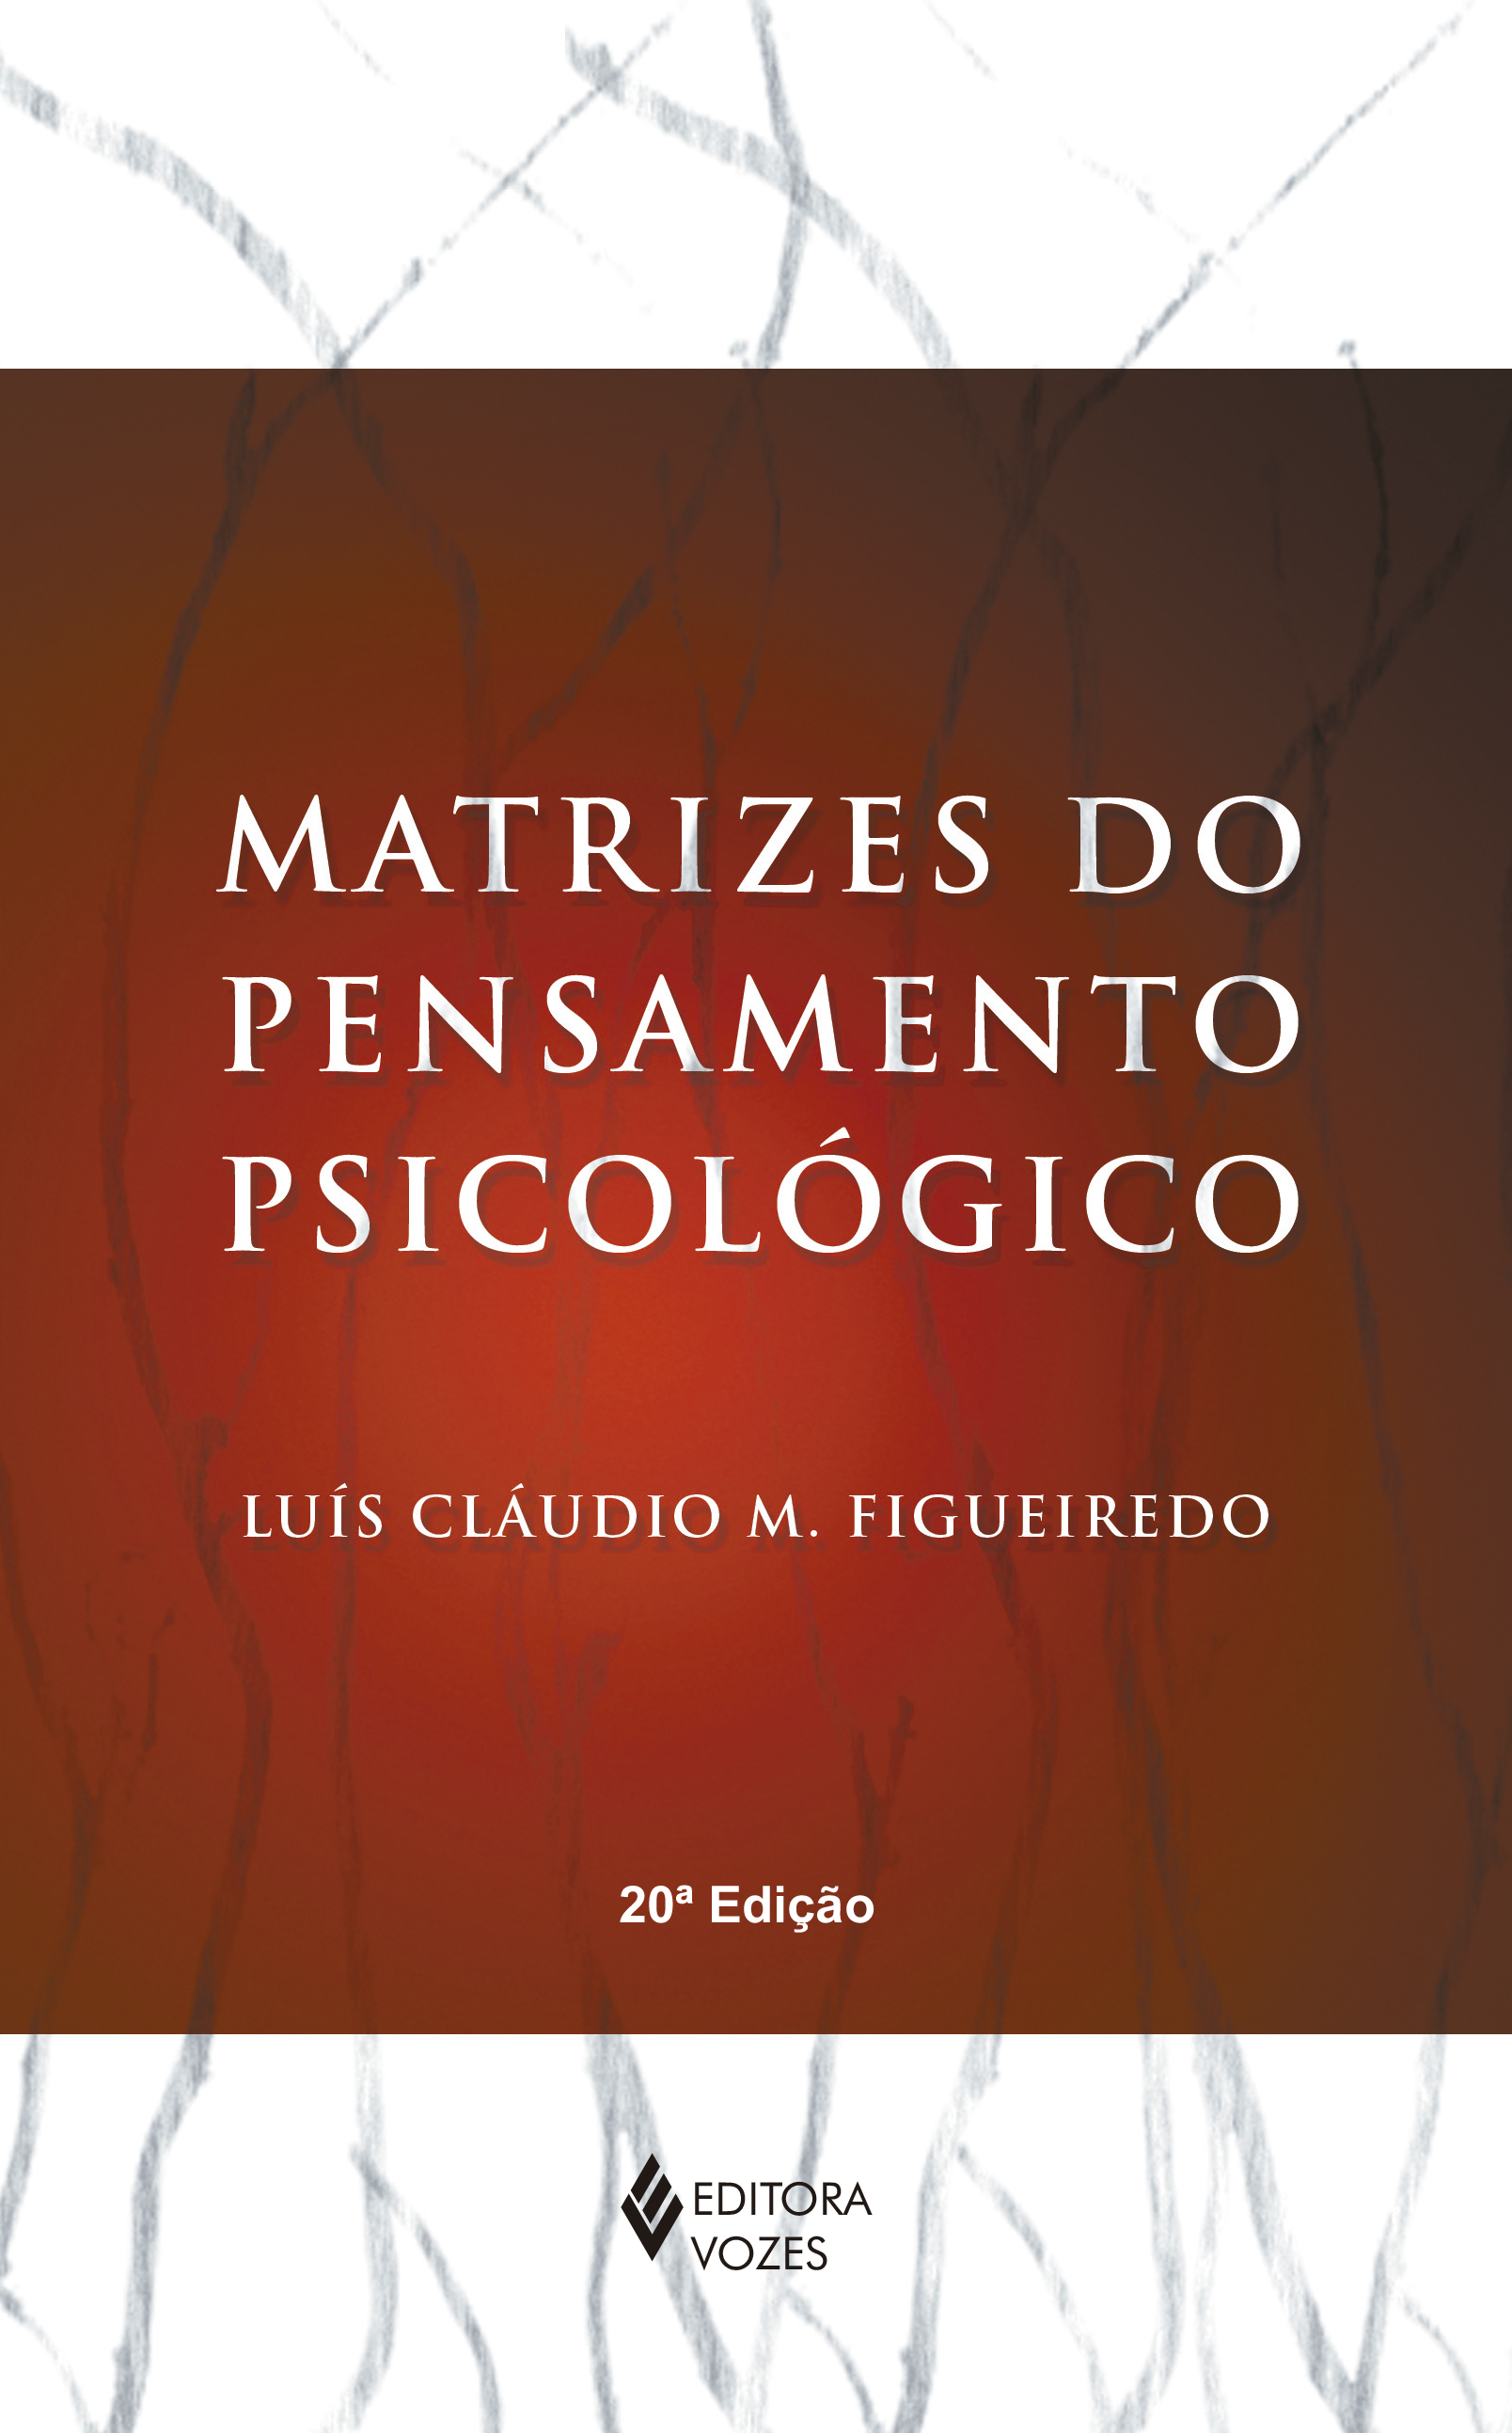 MATRIZES DO PENSAMENTO PSICOLOGICO